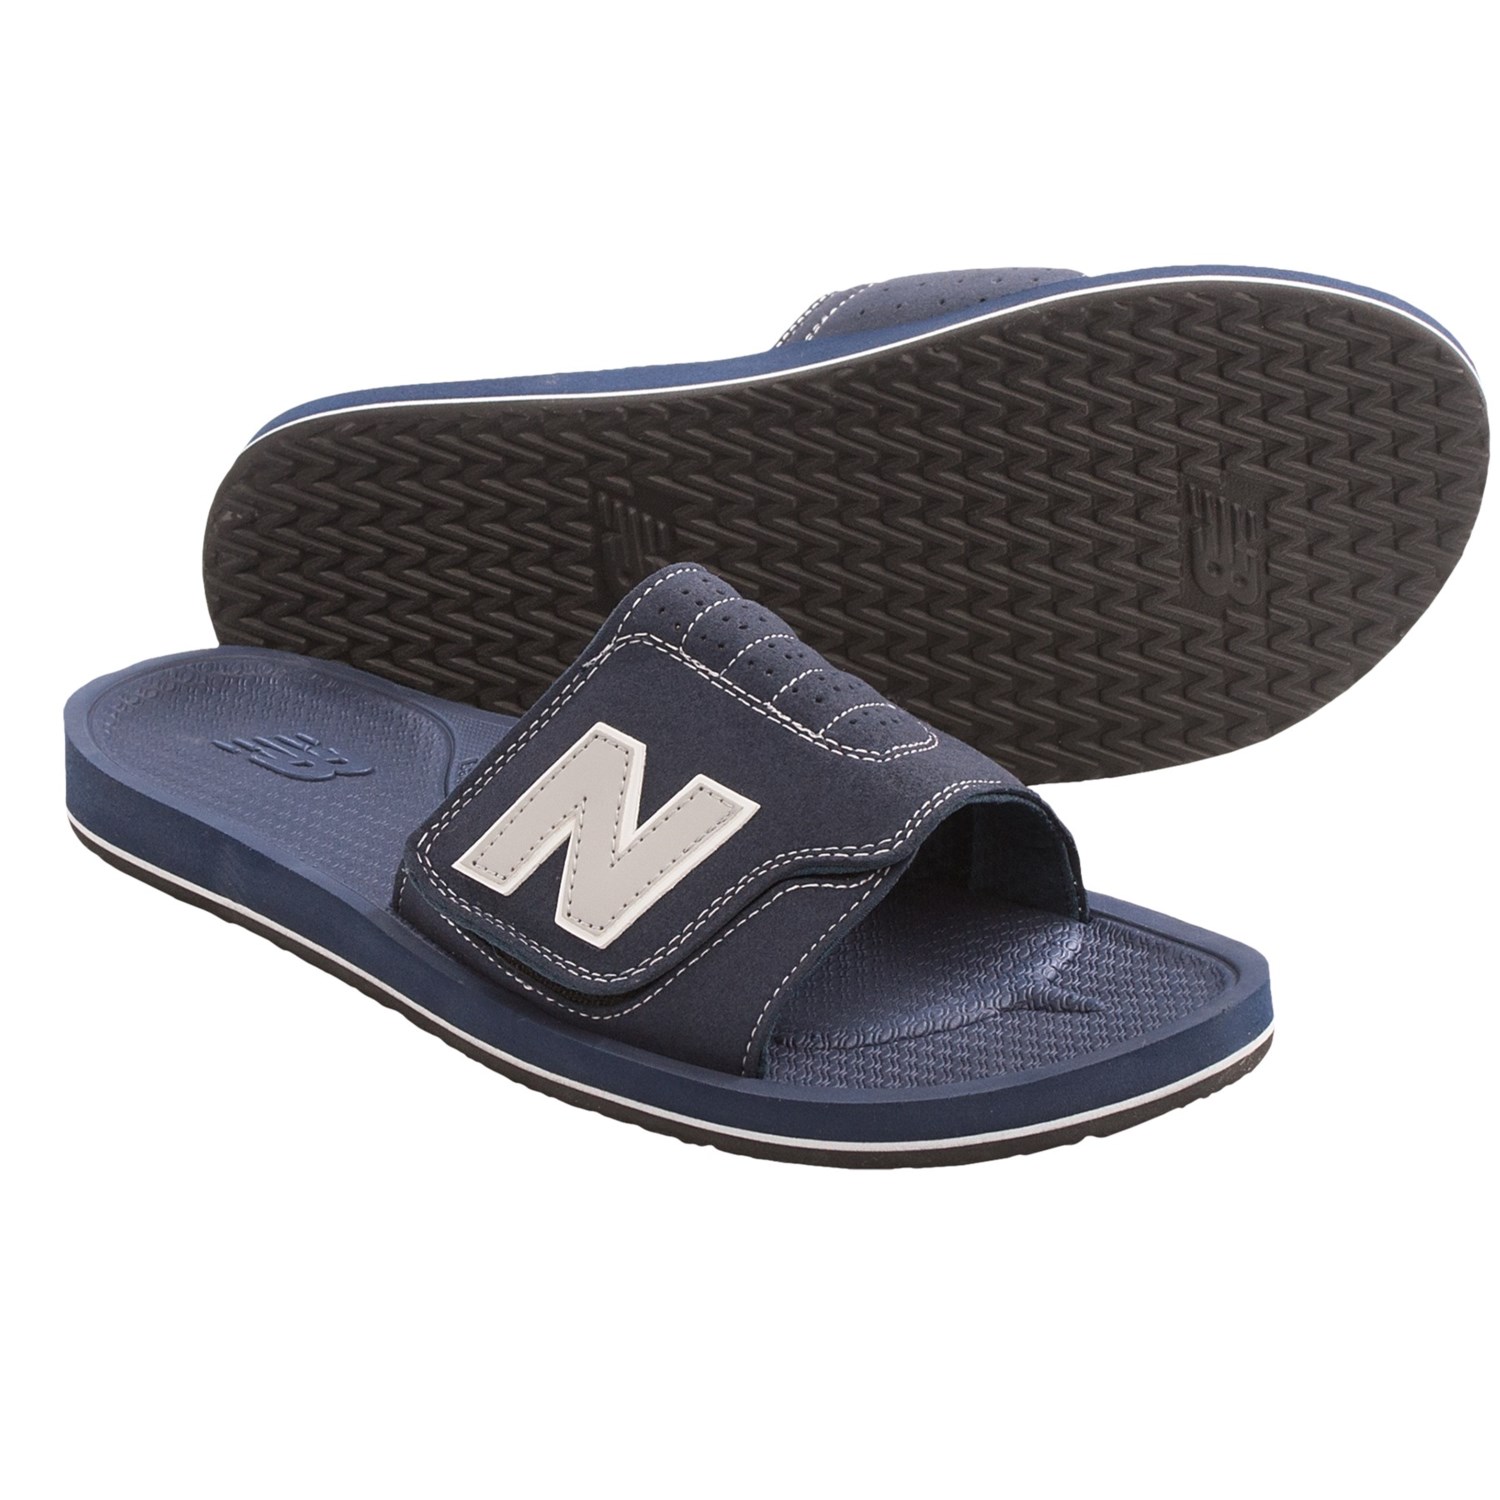 New Balance Classic Slide Sandals (For Men) - Save 31%